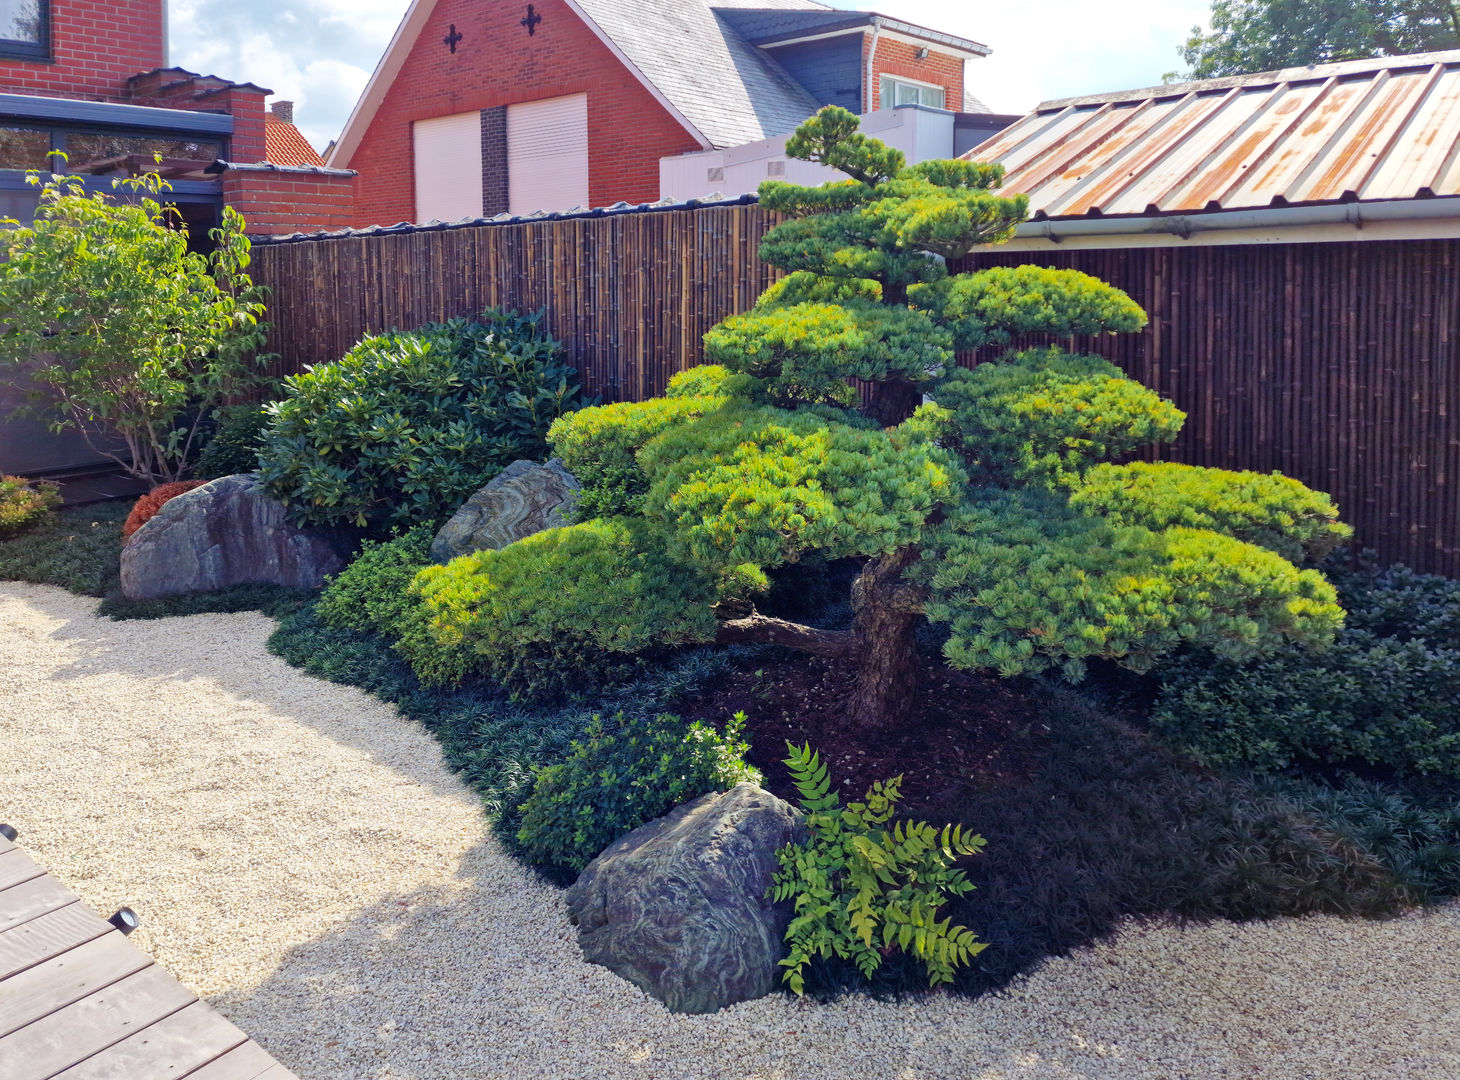 Japanese Backyard in Belgium